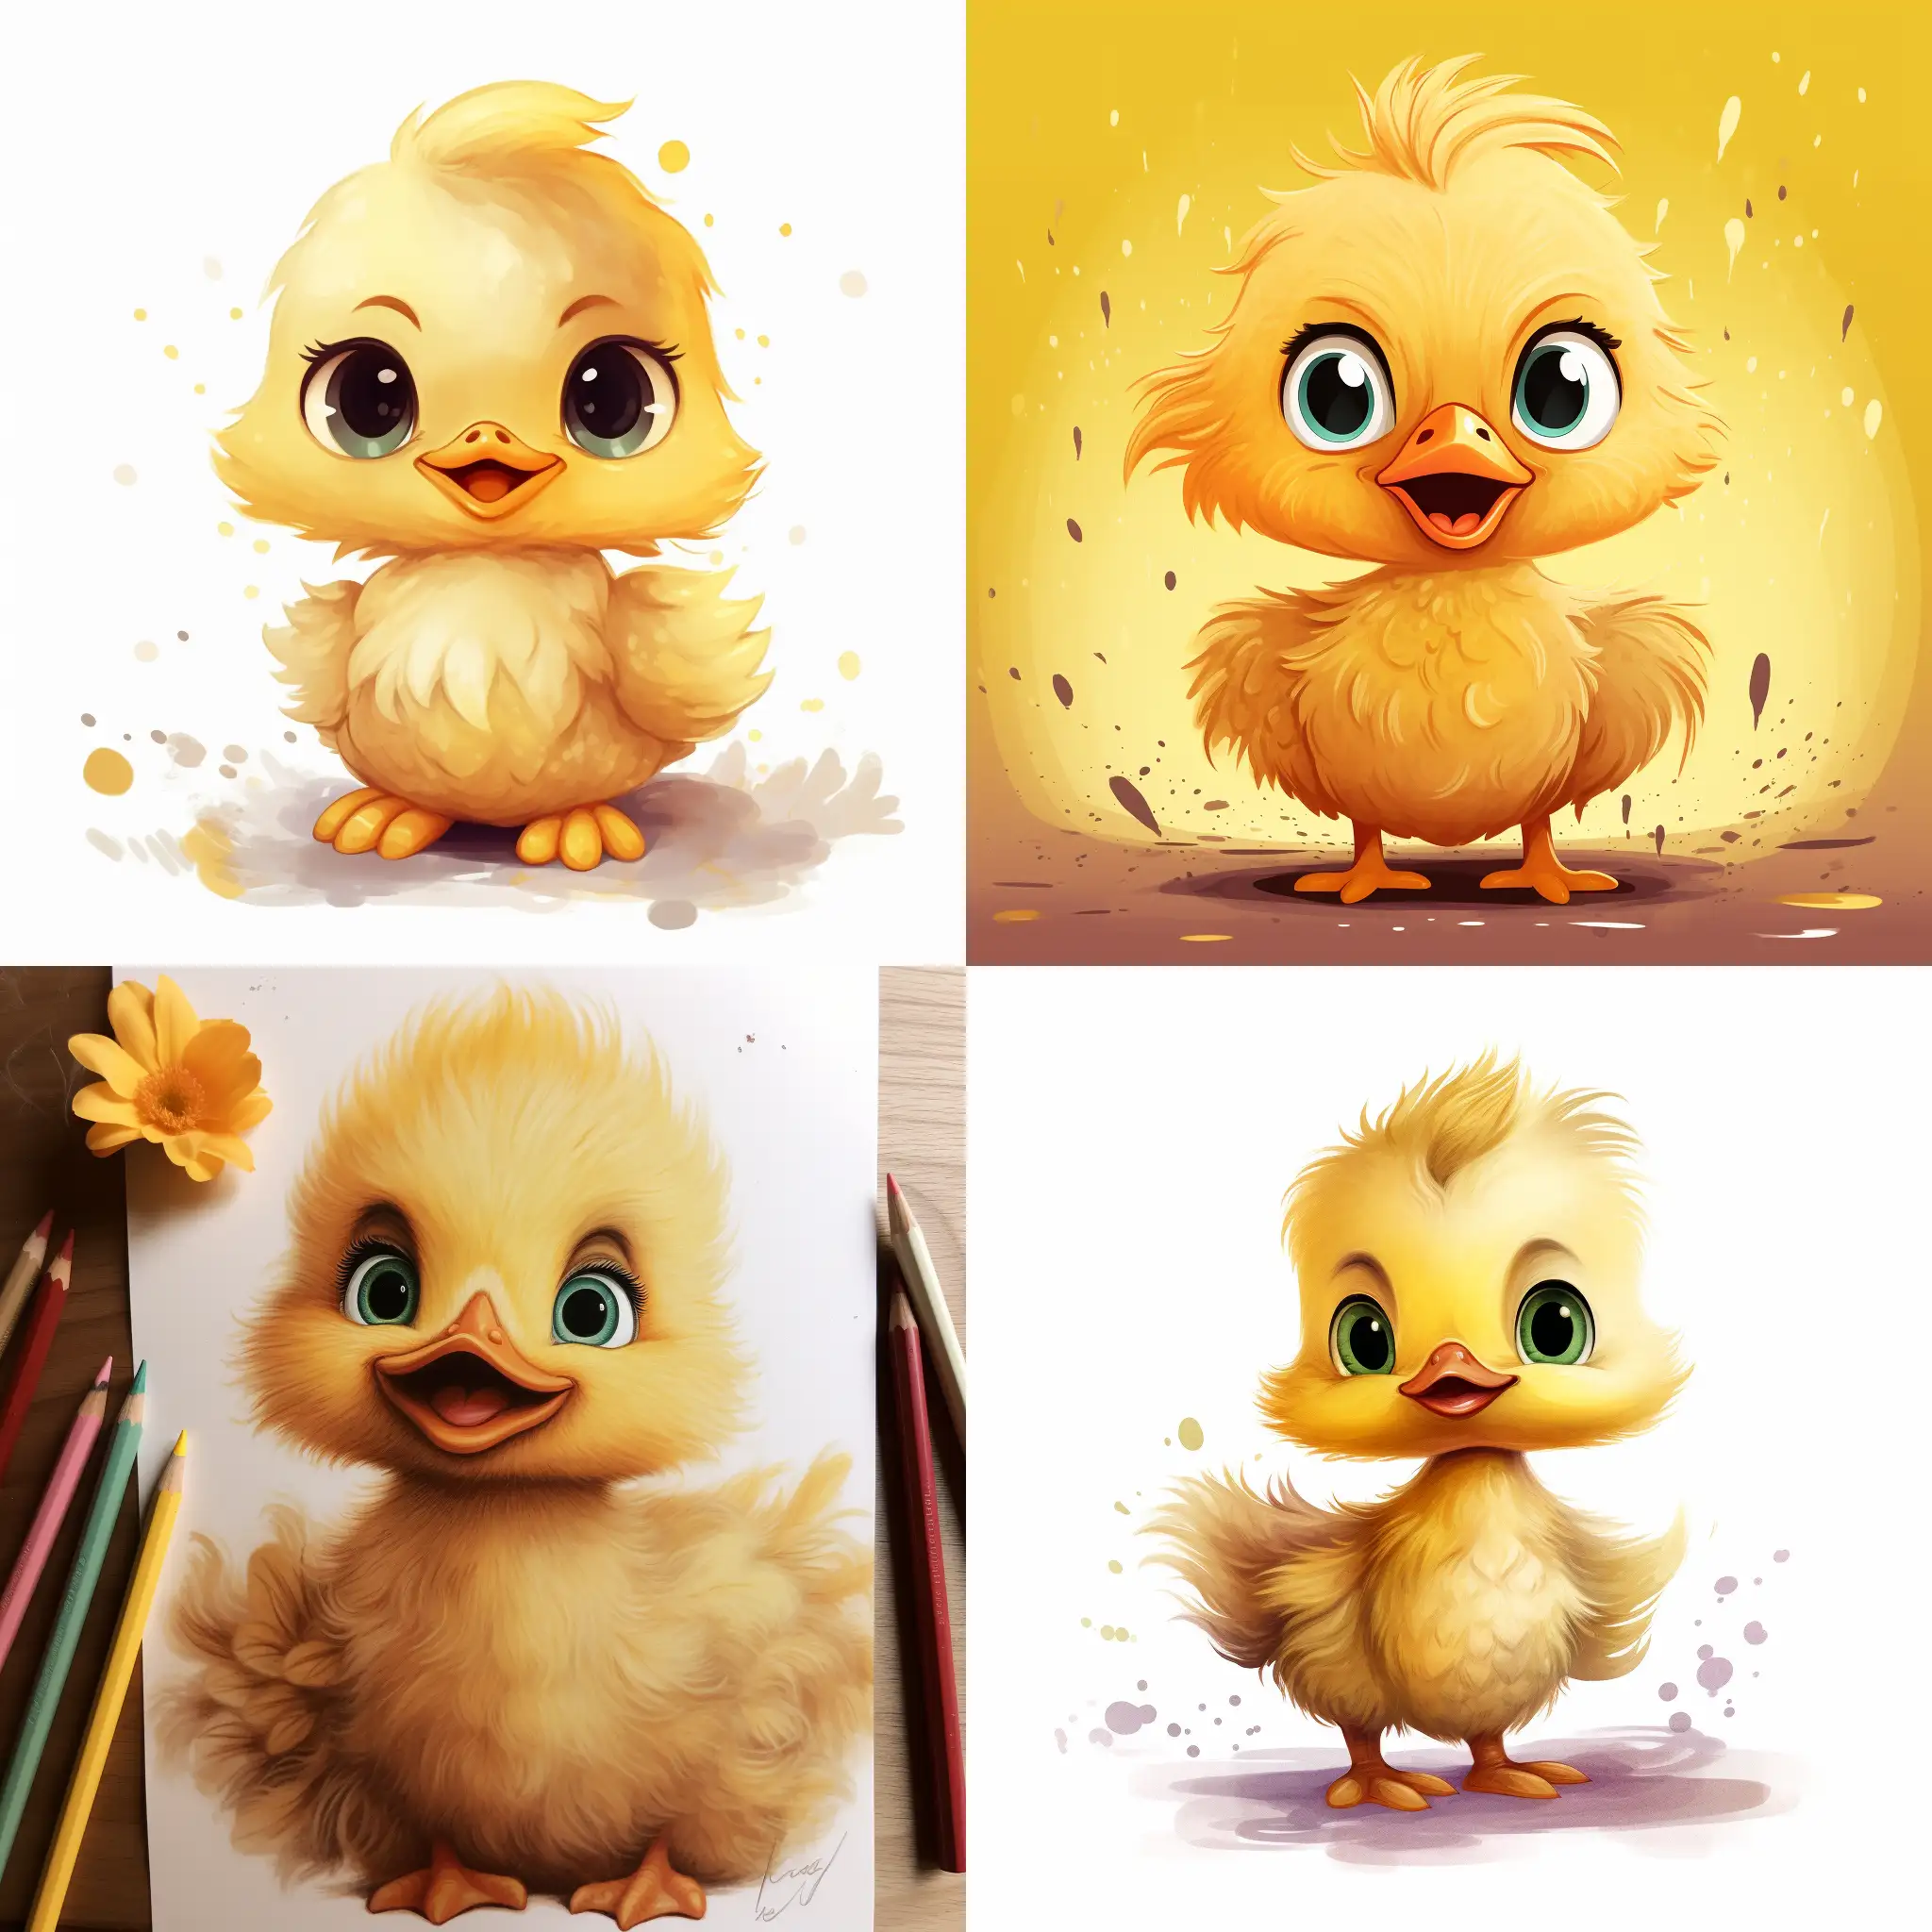 Cute-Cartoon-Yellow-Duckling-Illustration